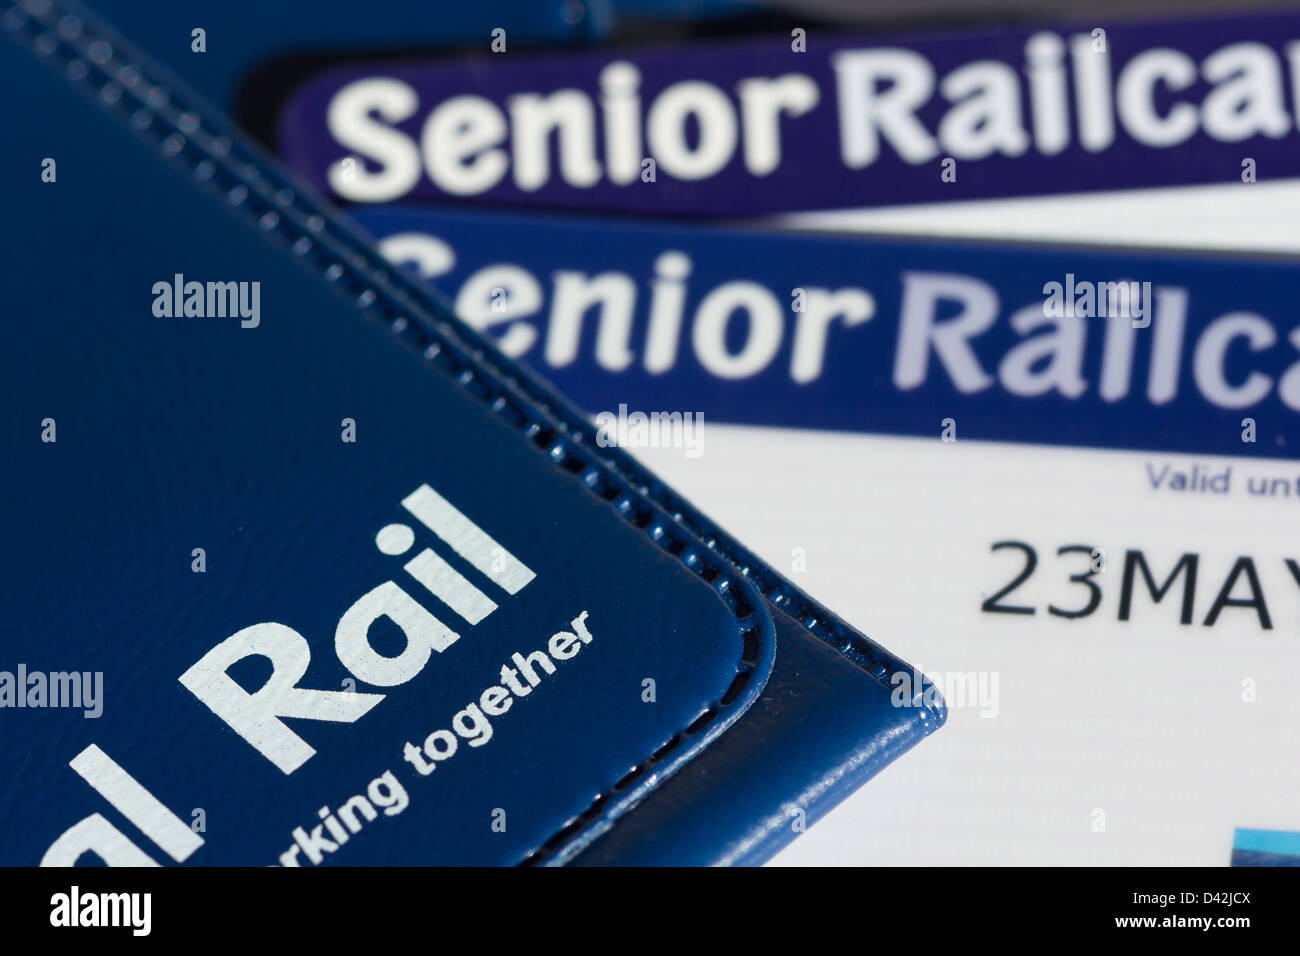 senior citizen railcards for British Rail customers. Stock Photo